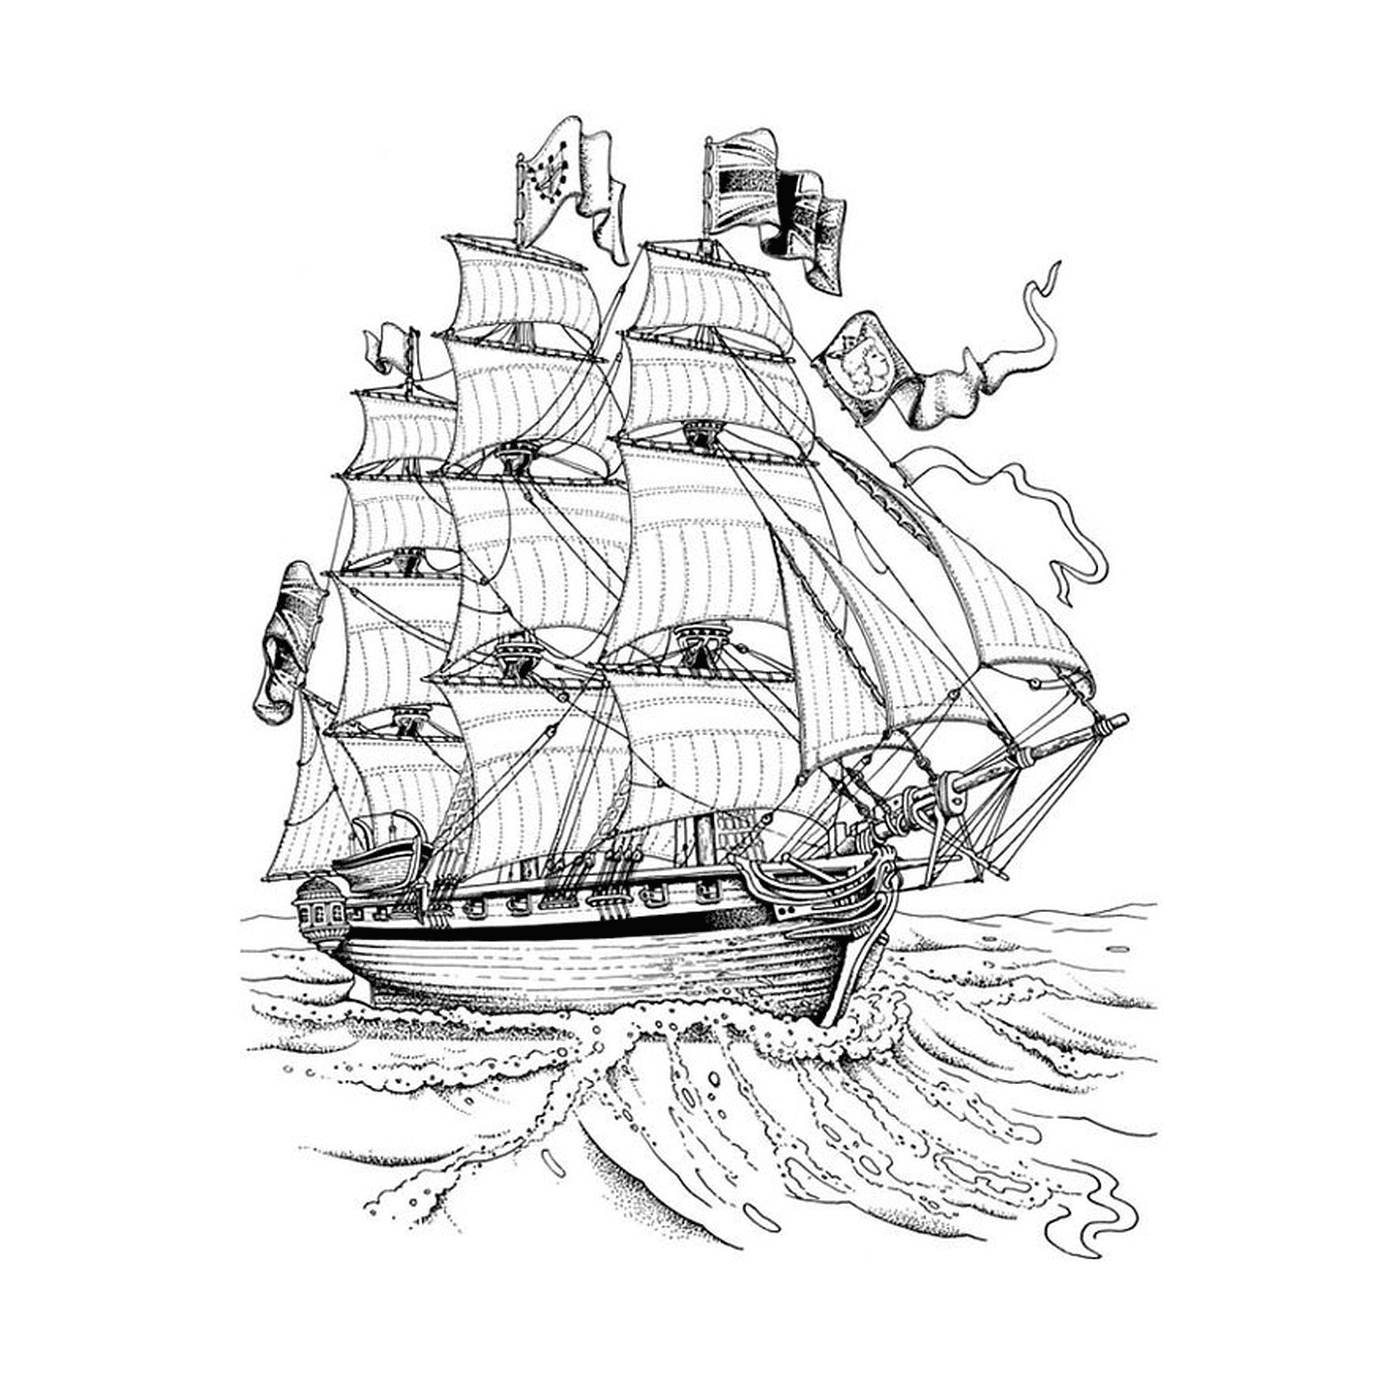  Barca del capitano Crochet 